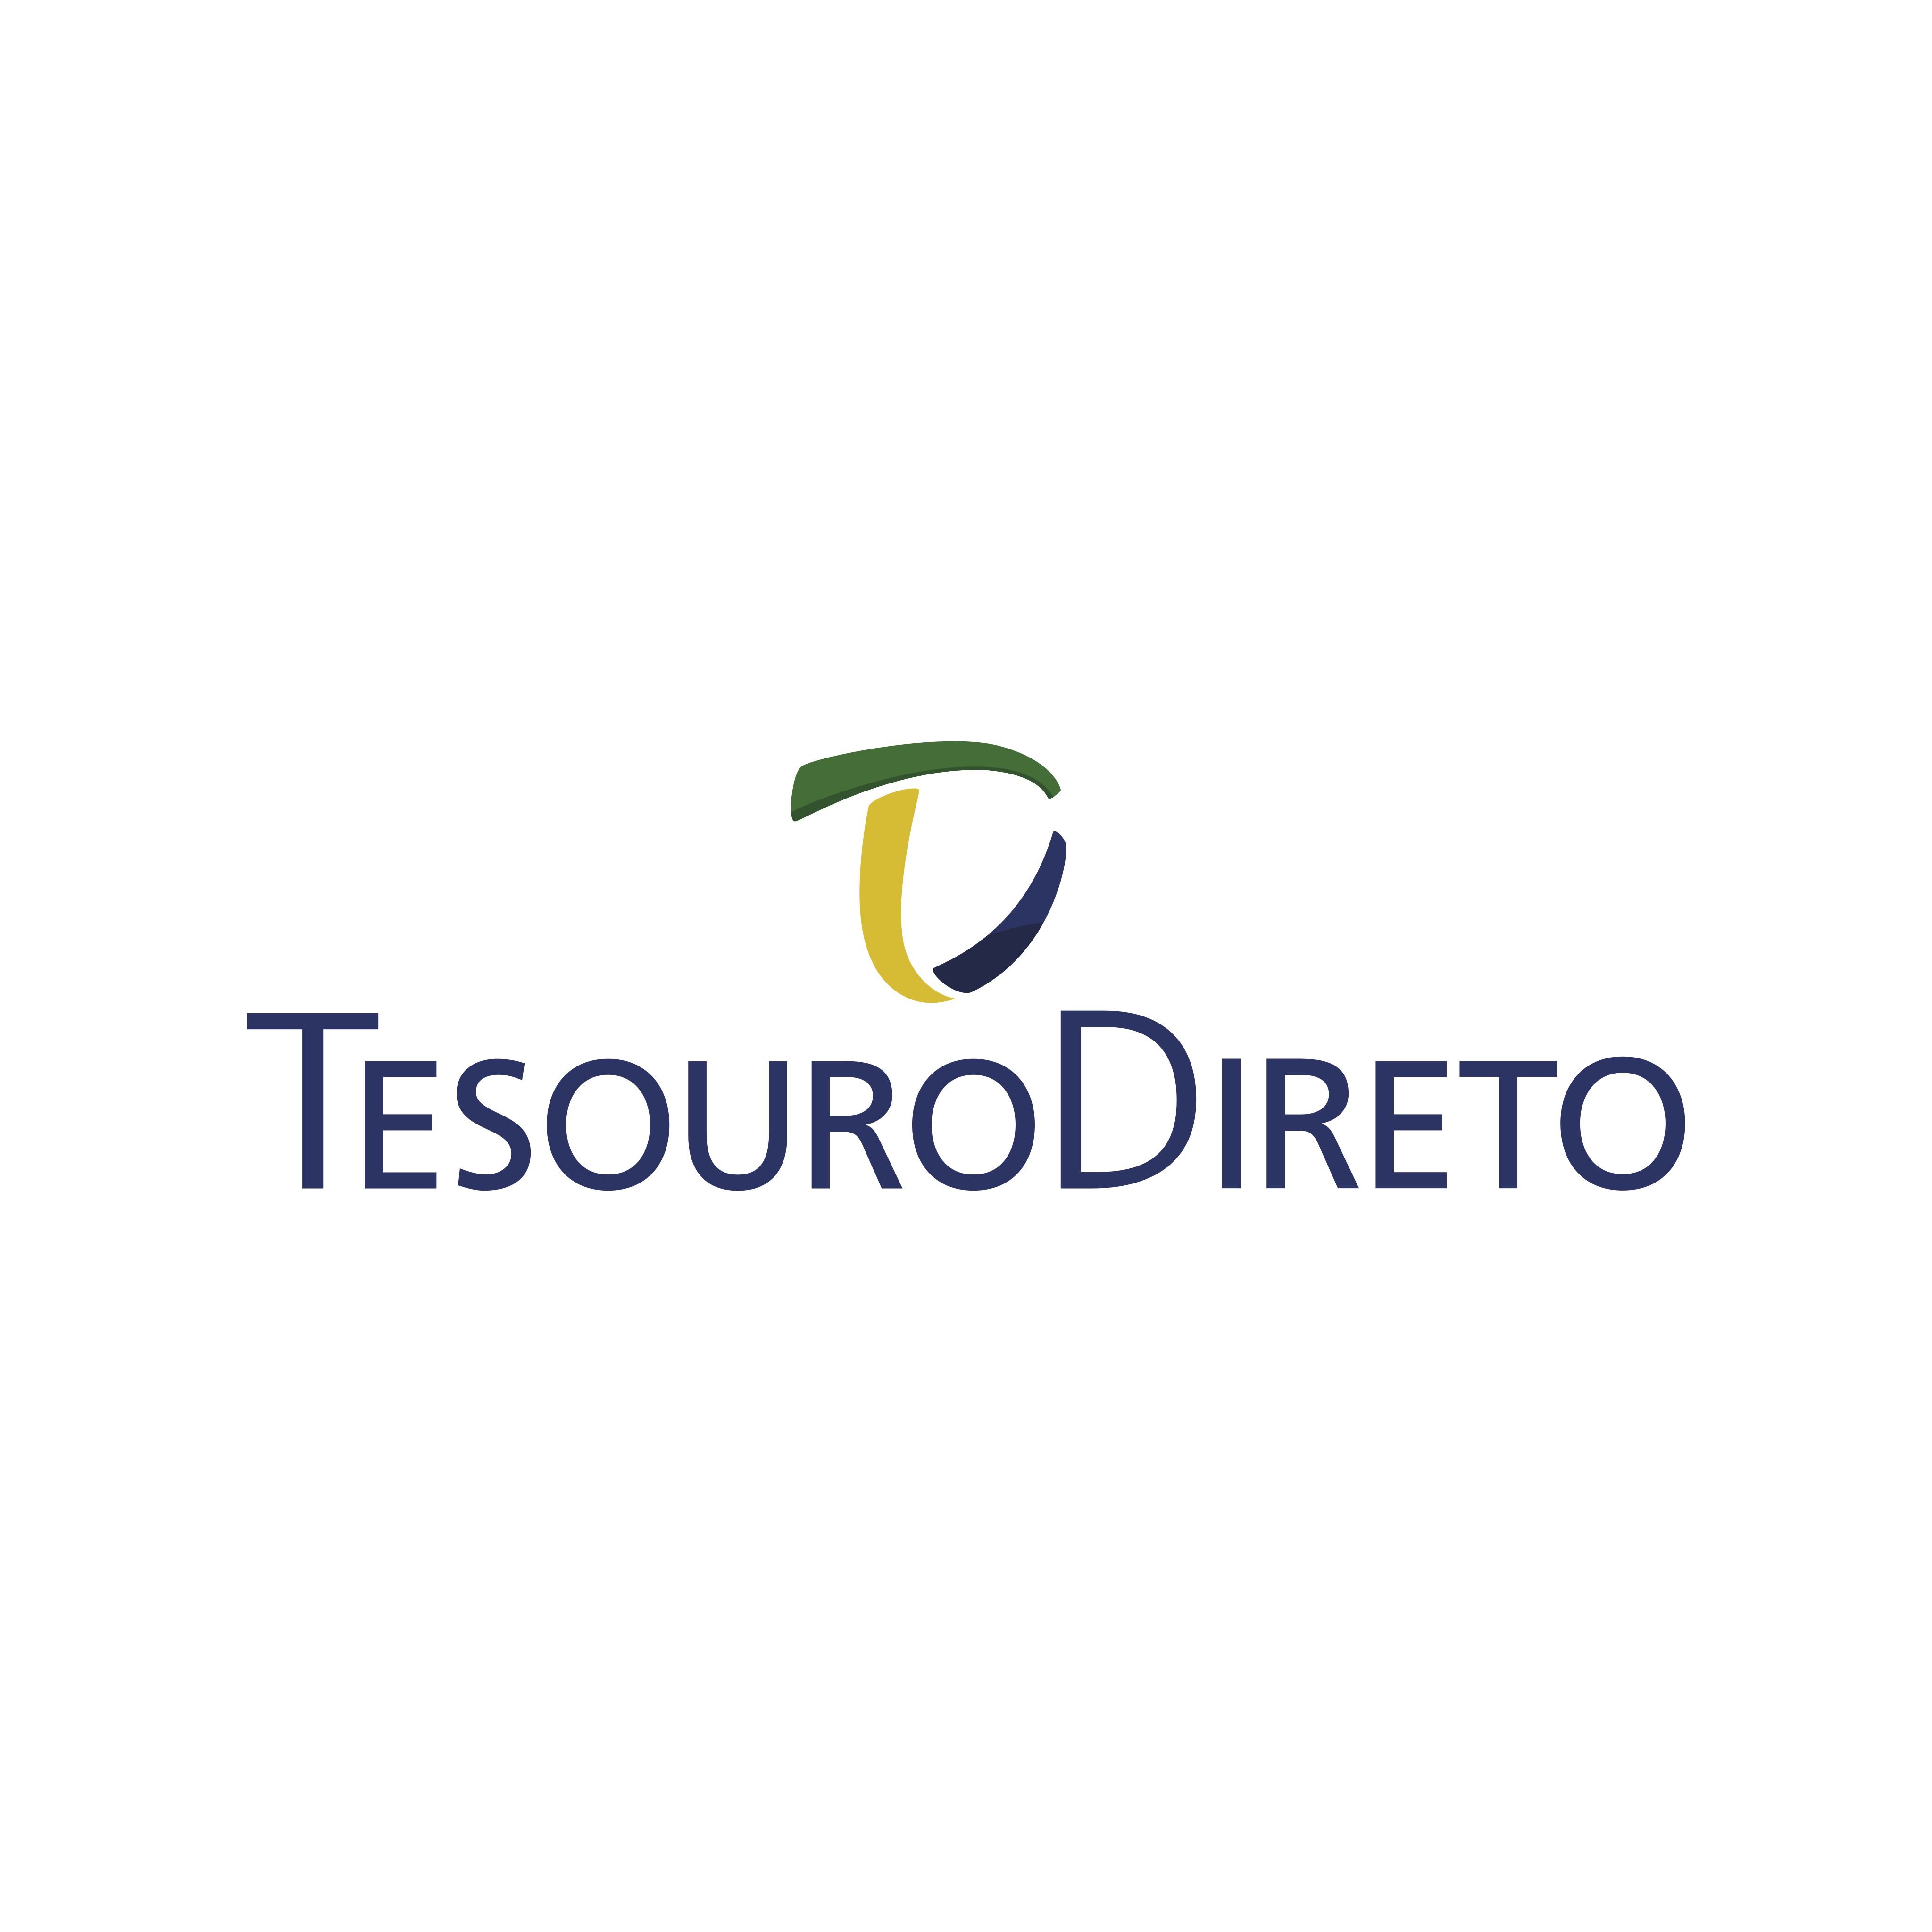 Tesouro Direto Logo PNG.